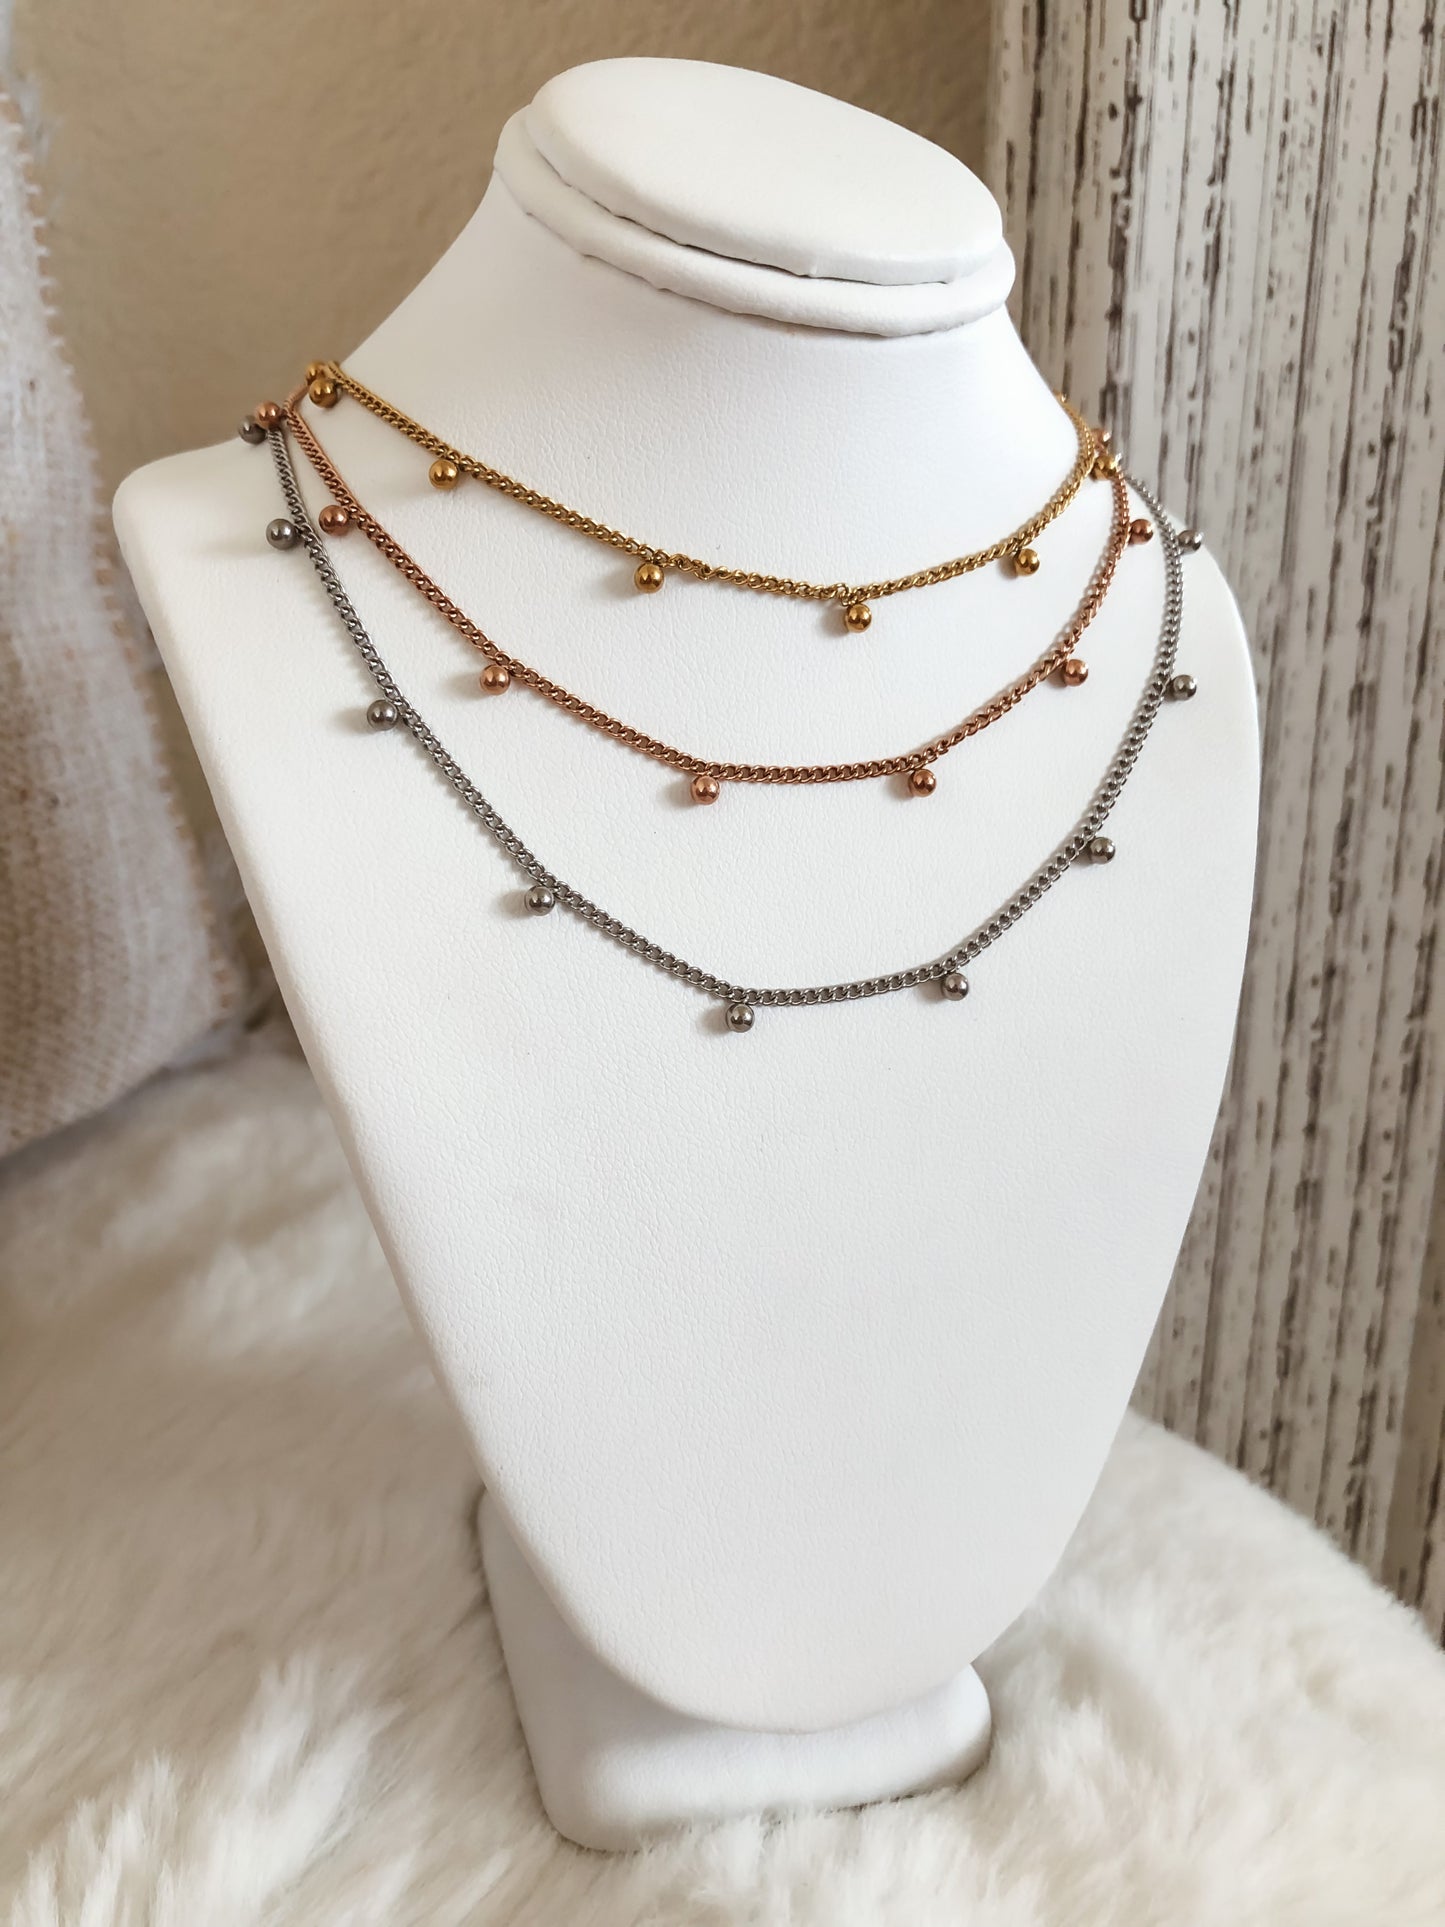 Goddess Collection - Silver Adorn Necklace